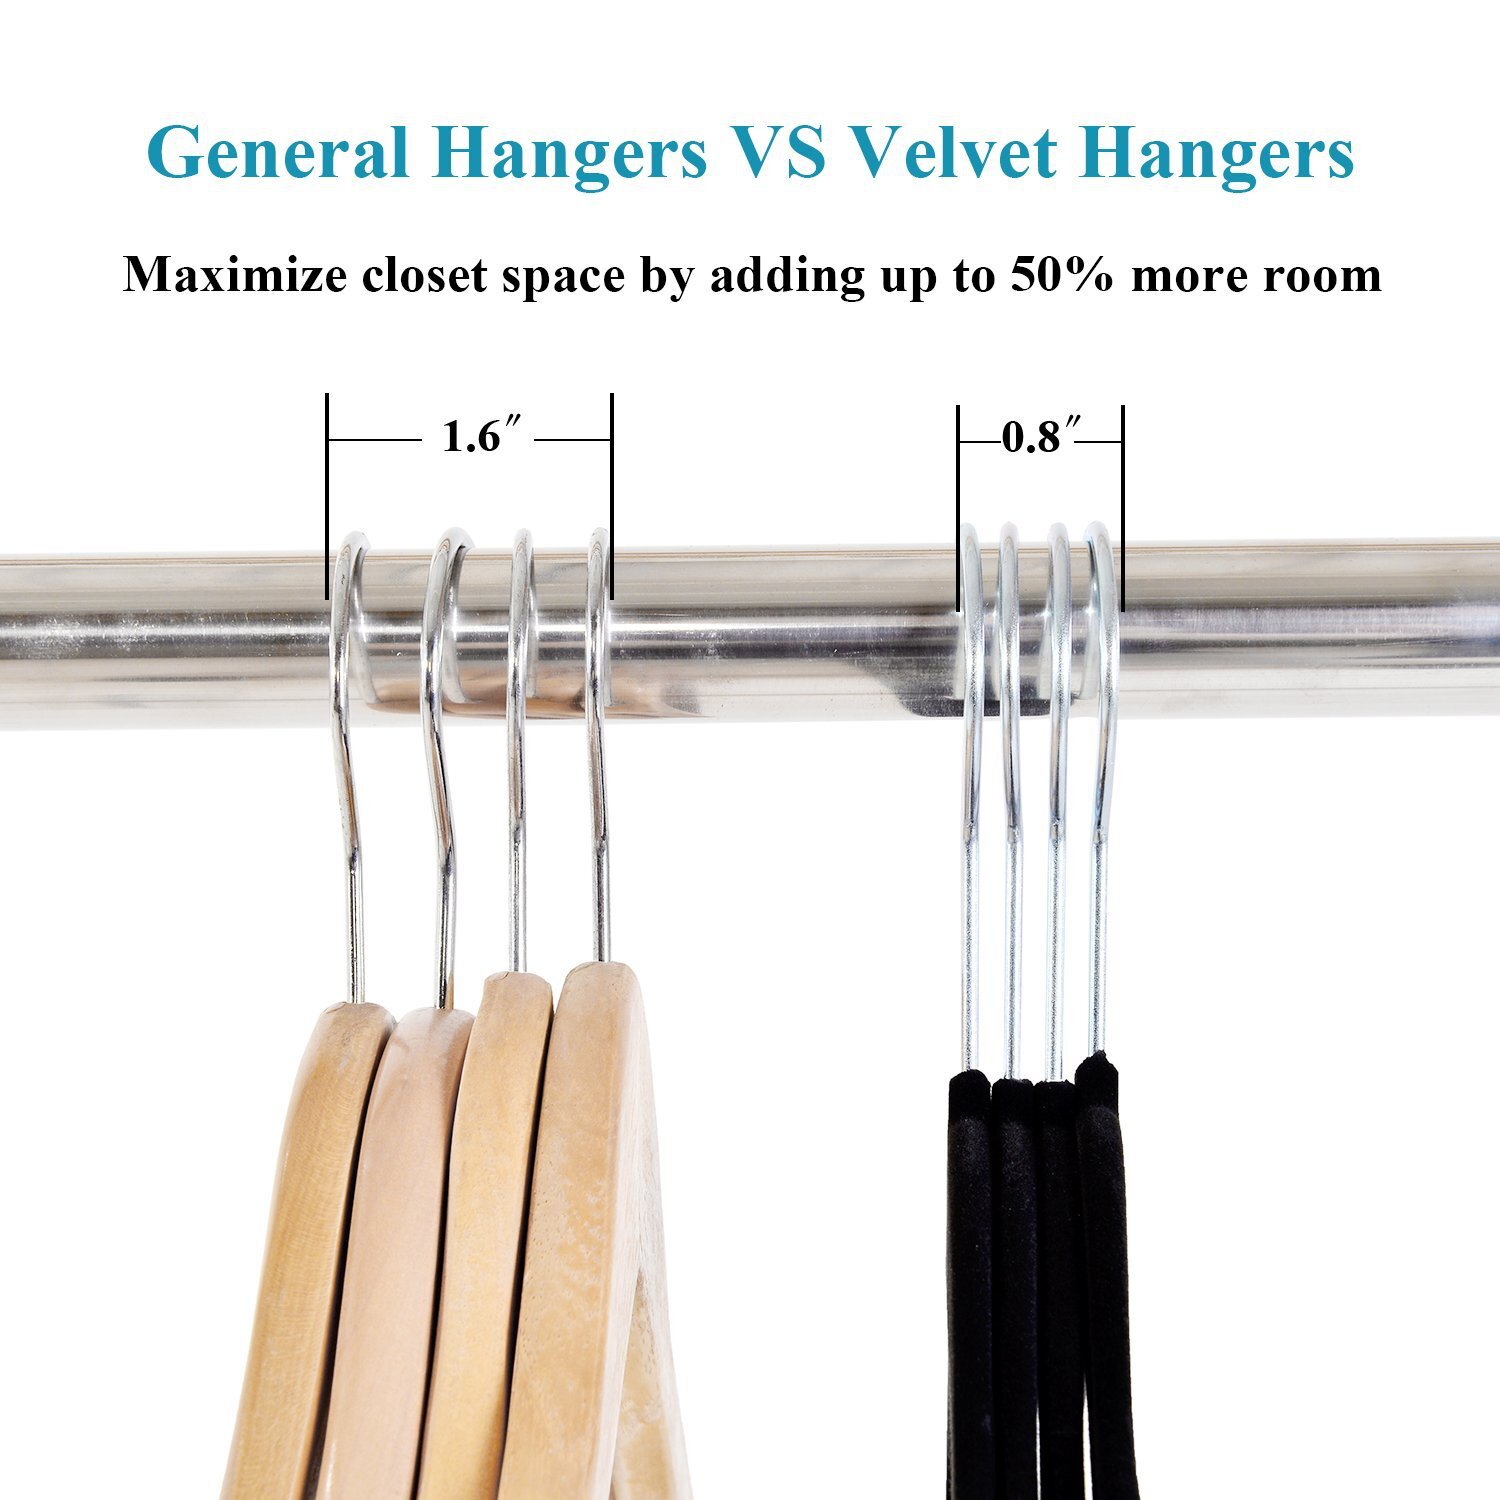 Do space saving hangers work?